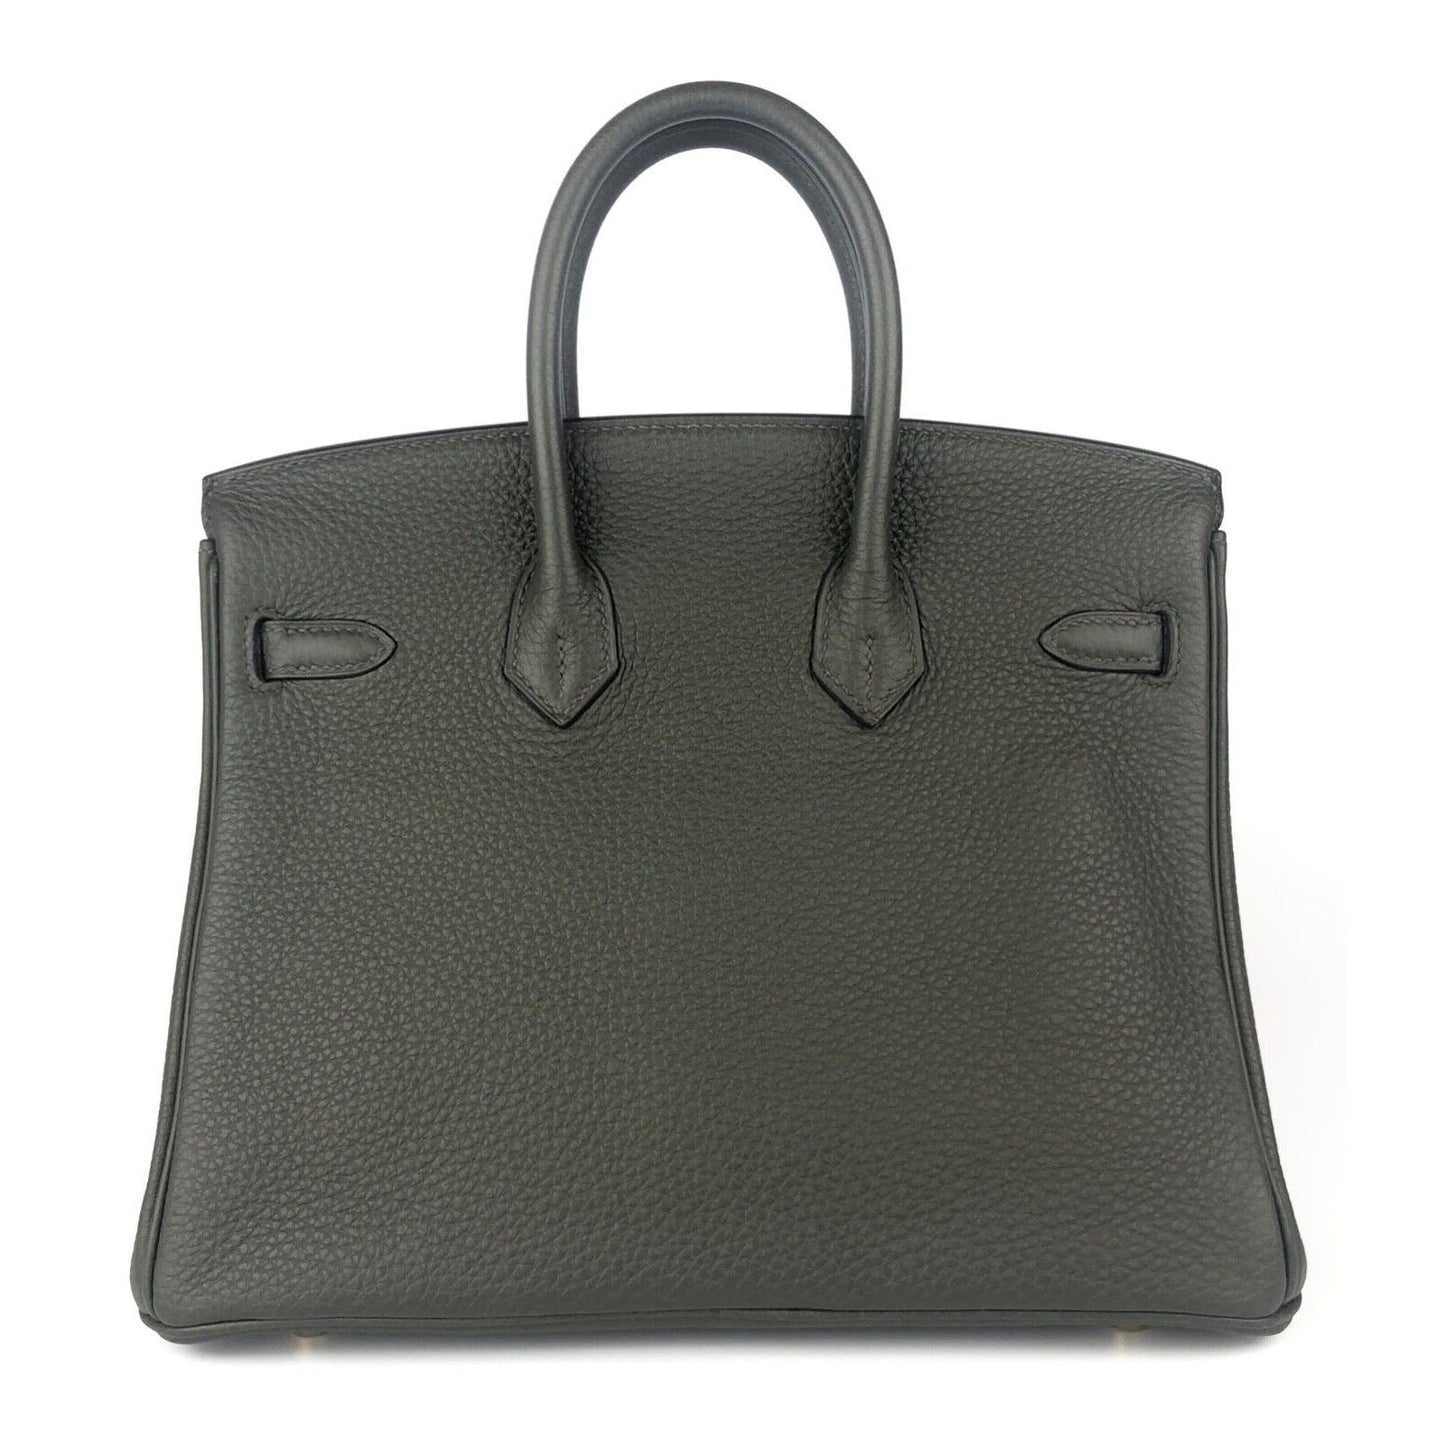 Hermes Birkin 25 Vert de Gris Green Gray Leather Gold Hardware Handbag